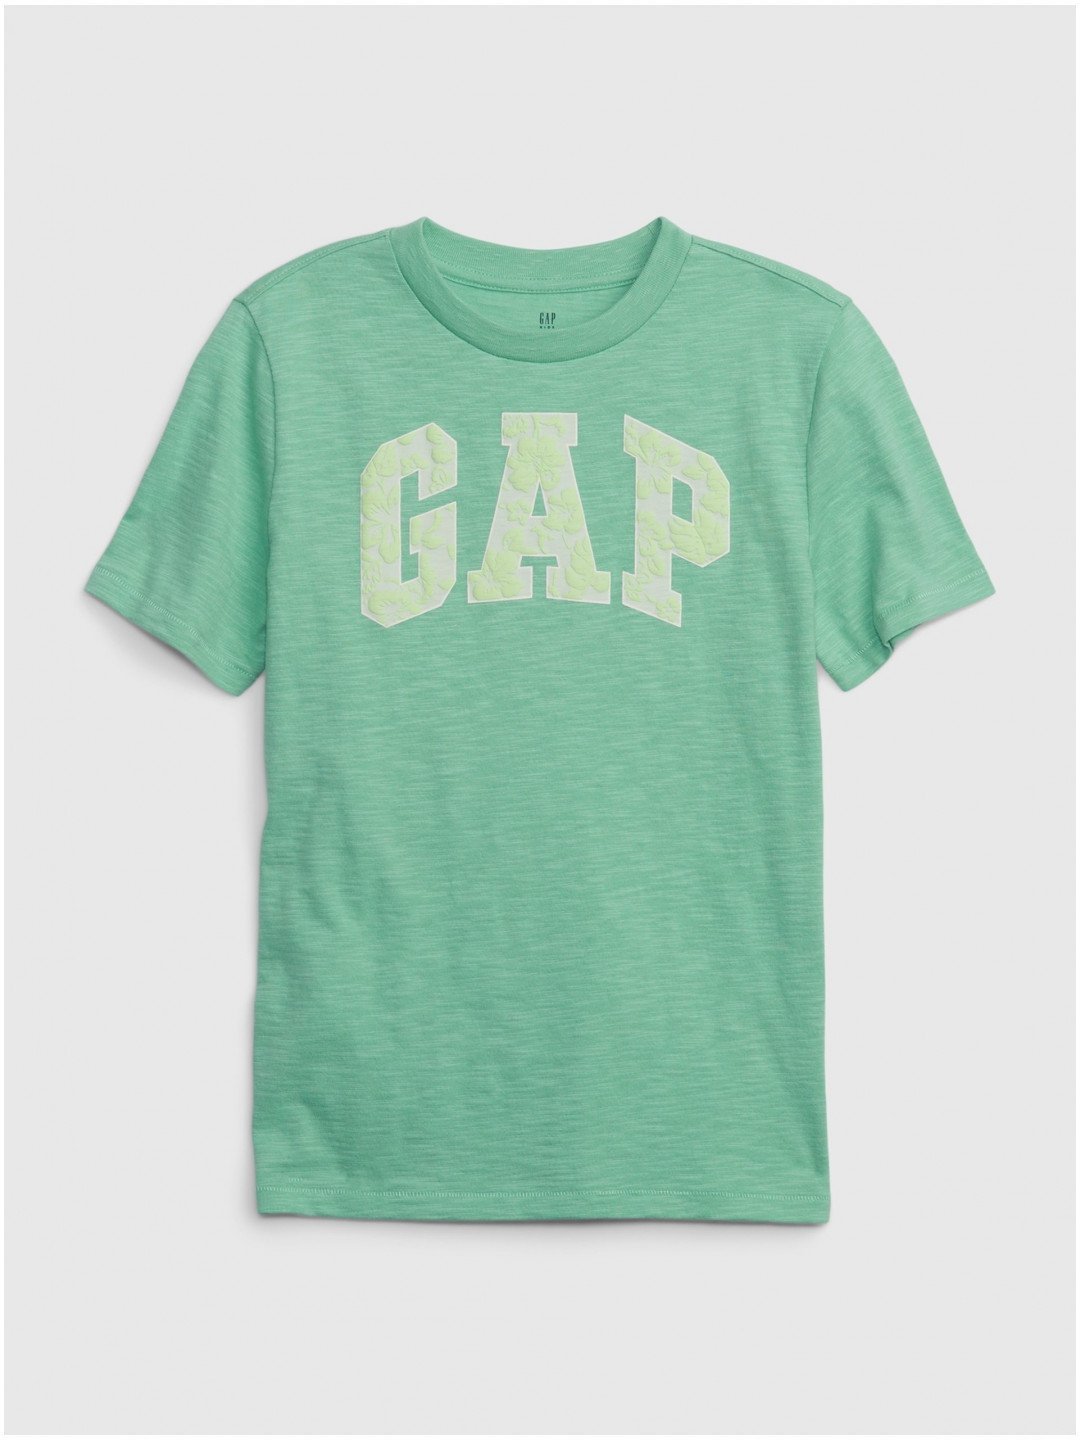 Zelené klučičí tričko s logem GAP